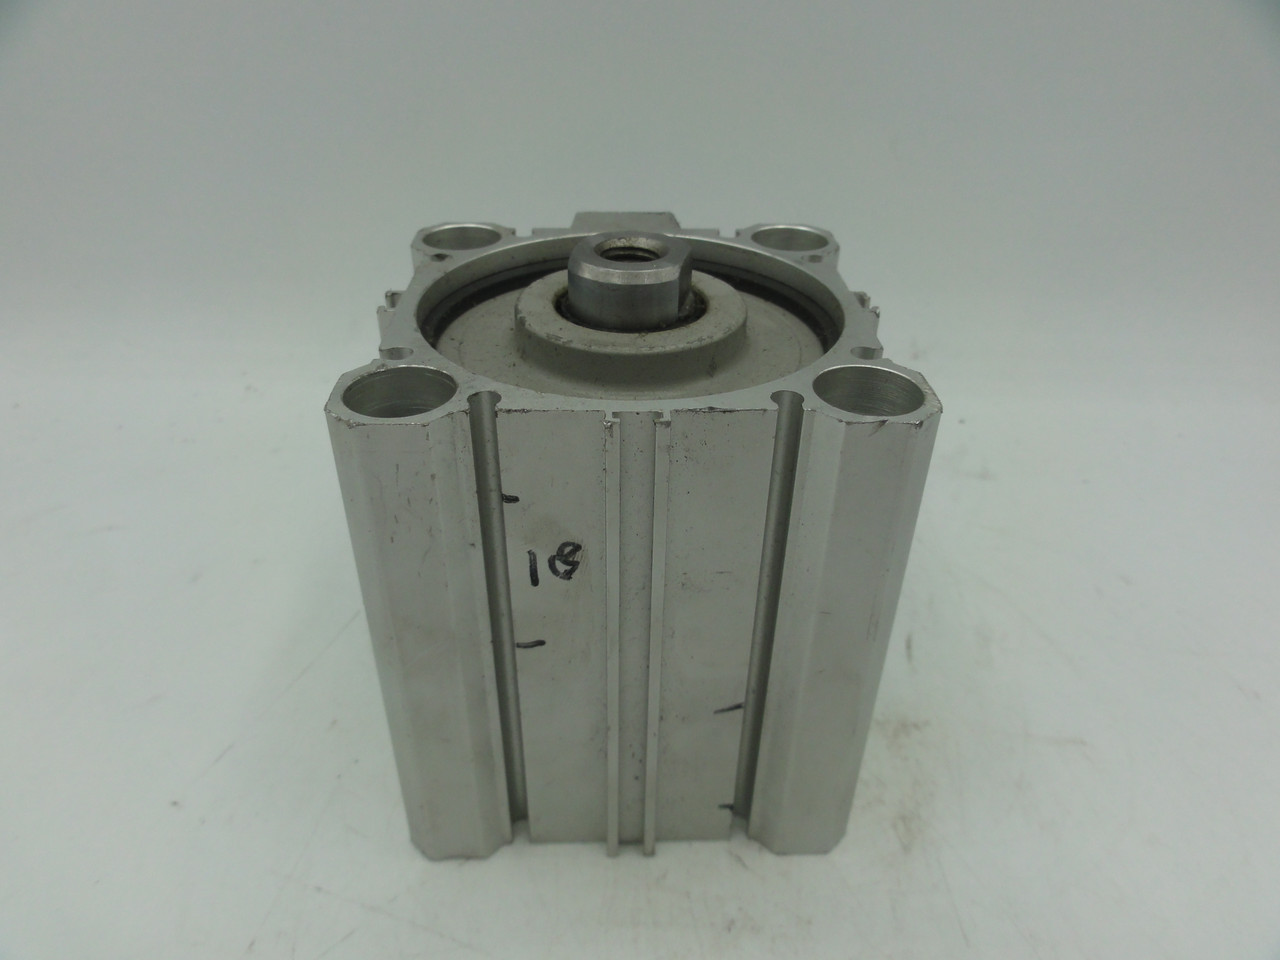 SMC CDQZB63-40D Cylinder